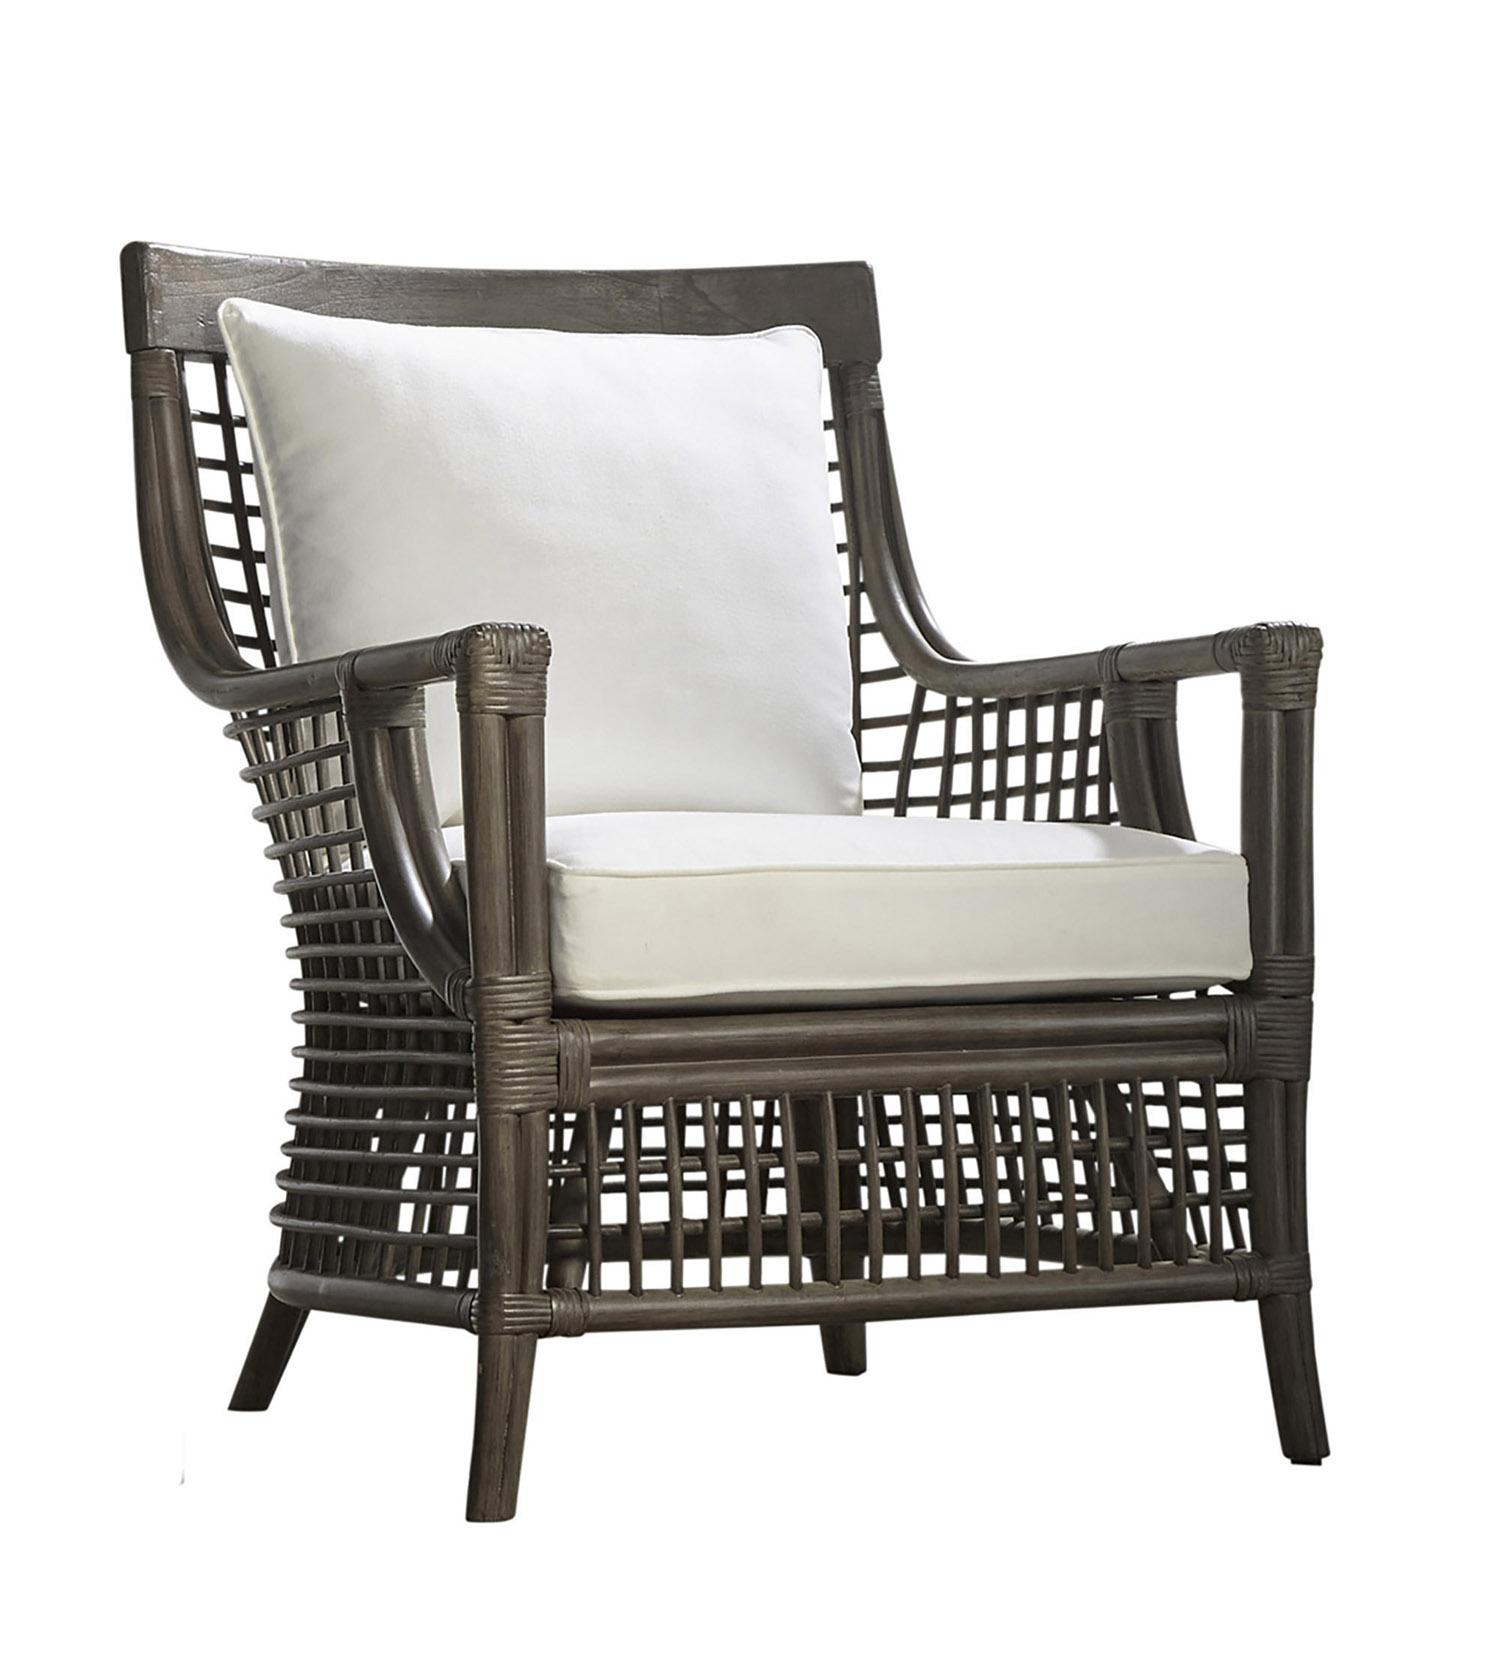 Classic Outdoor Chair Millbrook PJS-7001-KBU-LC in Gray Fabric